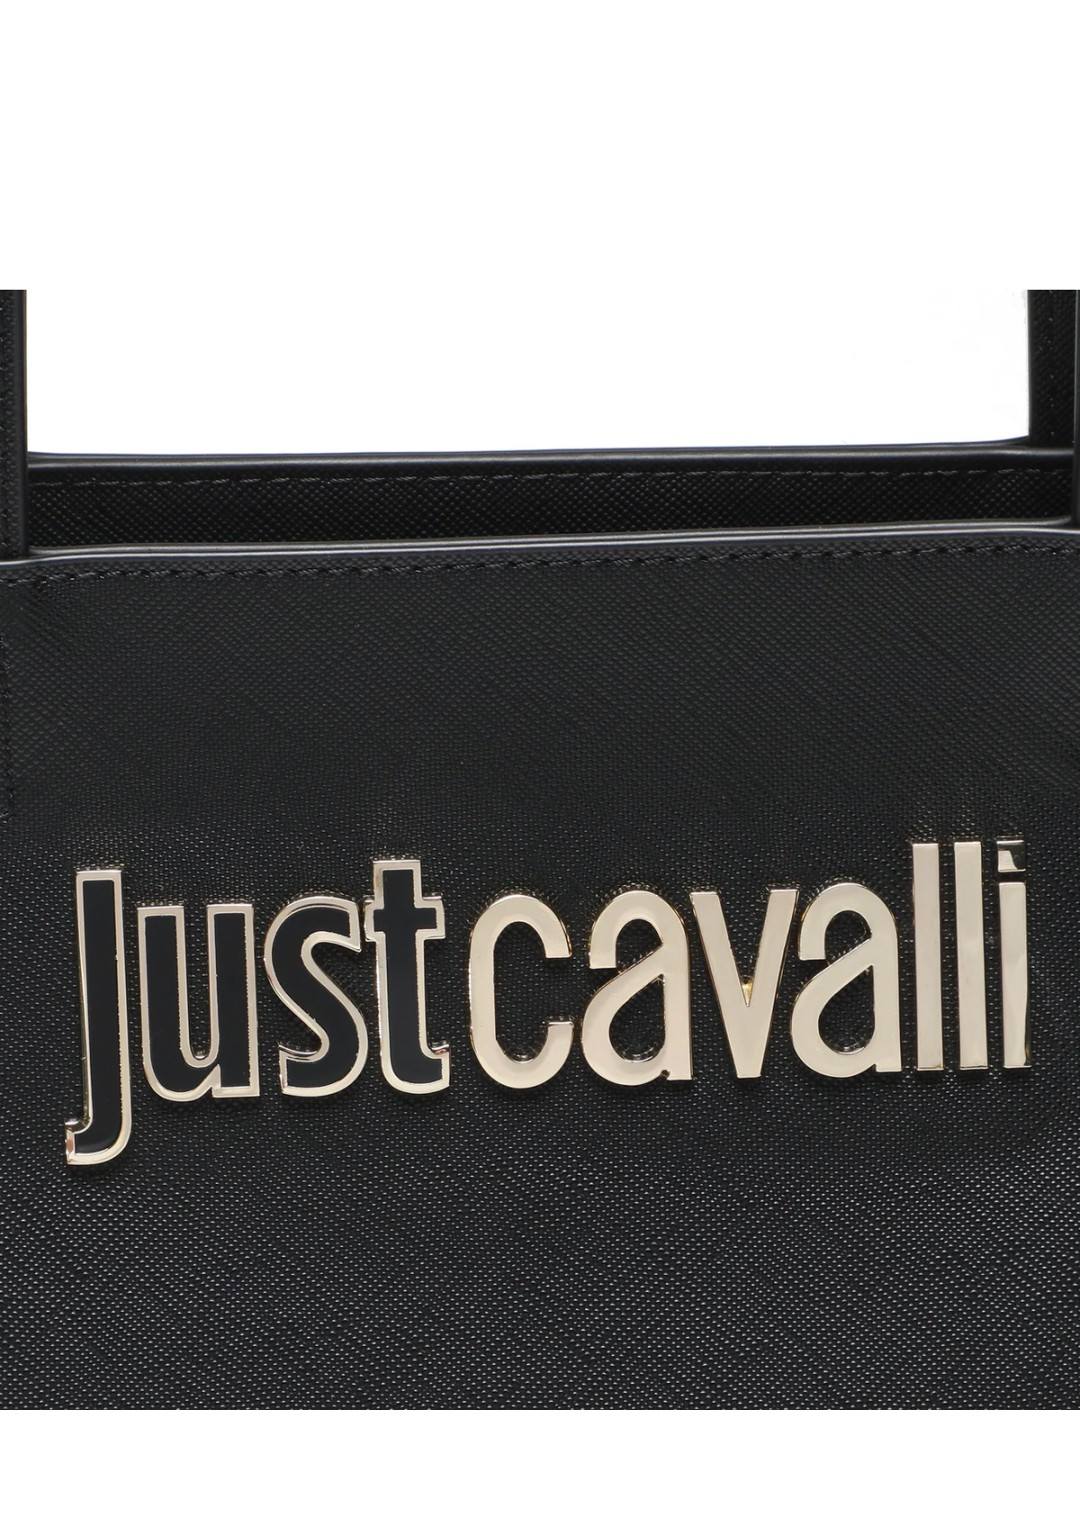 Just Cavalli - Shopper scritta - Donna - 75RA4BB7 899